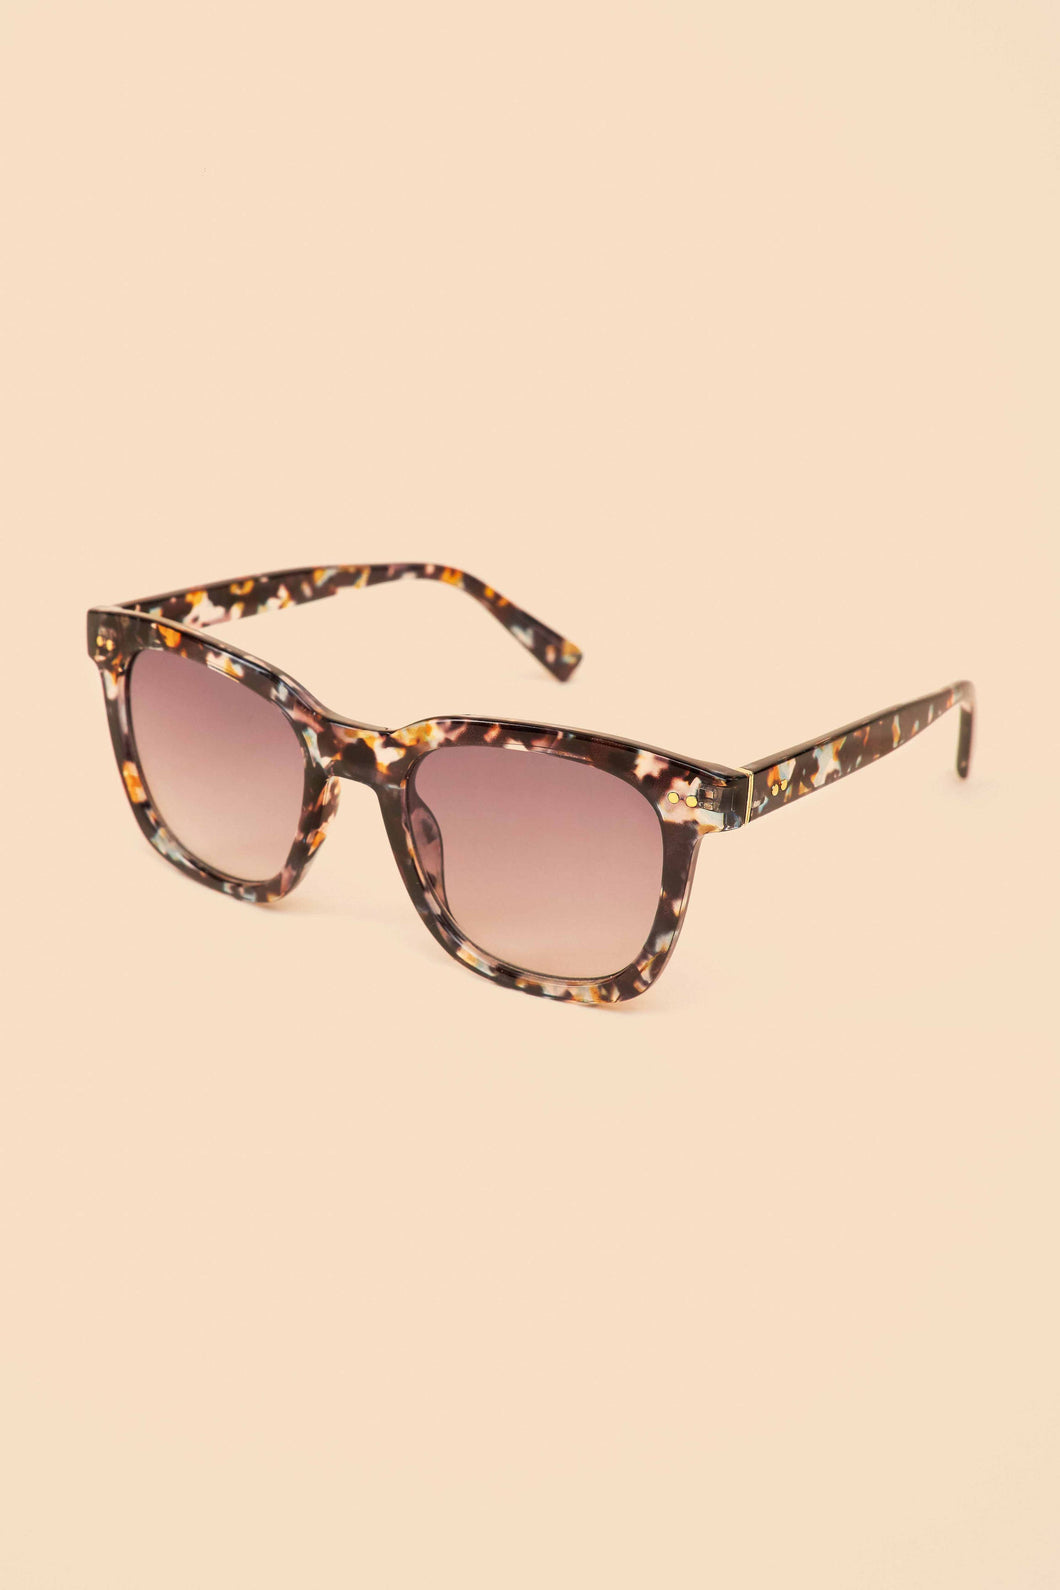 Limited Edition Katana Sunglasses - Mono Tortoiseshell